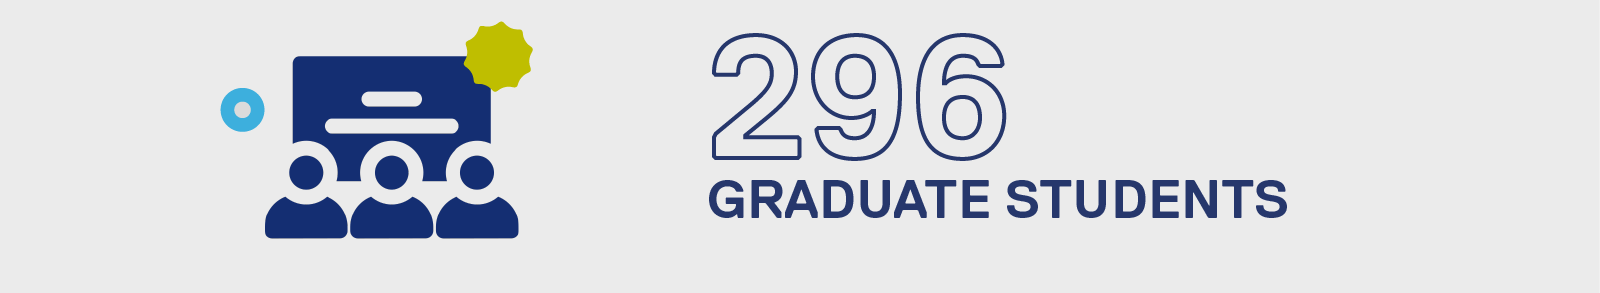 296 graduate students